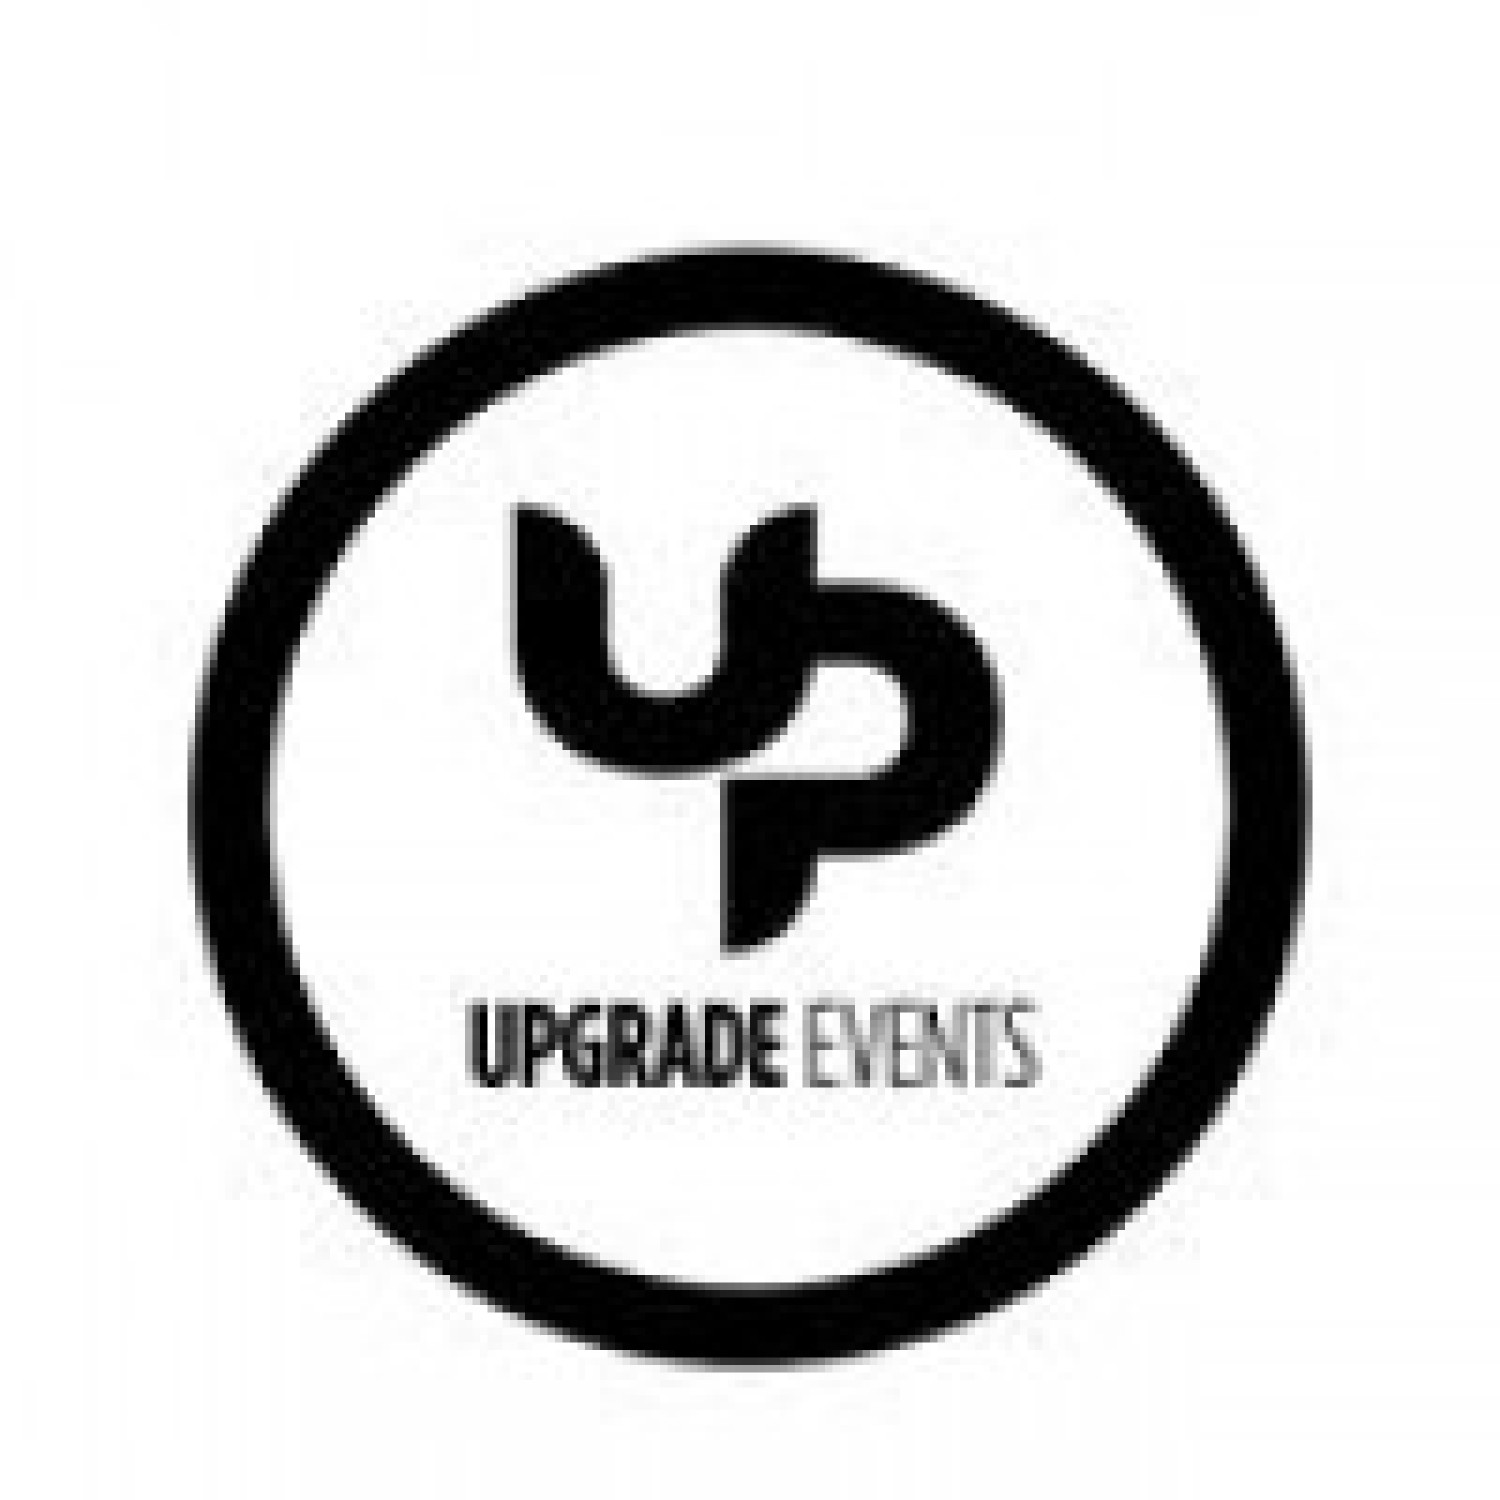 Upgrade Events